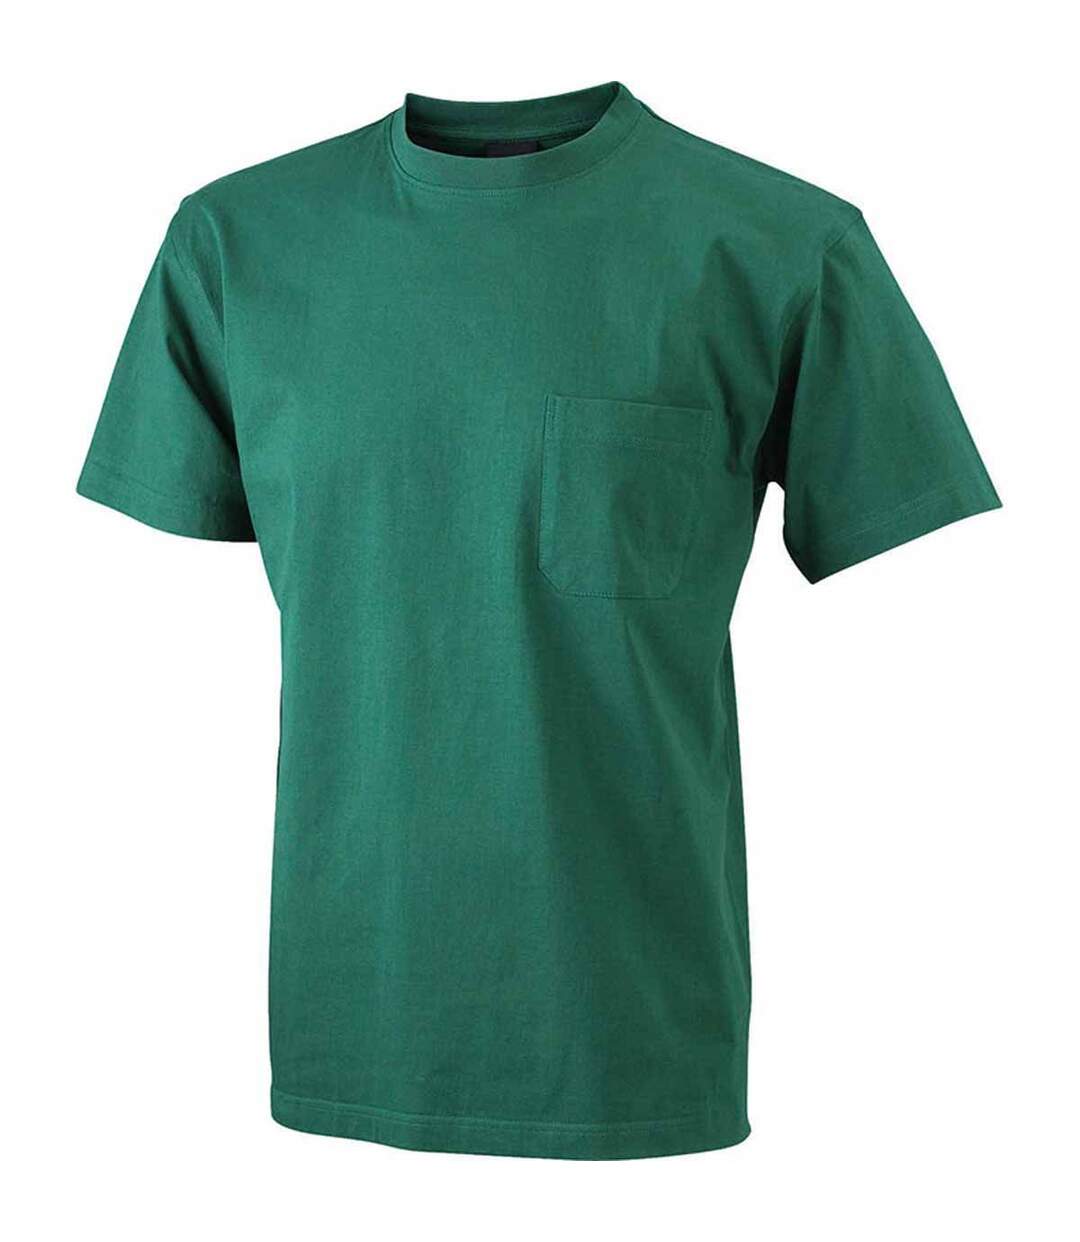 T-shirt homme poche poitrine - JN920 - vert foncé - workwear